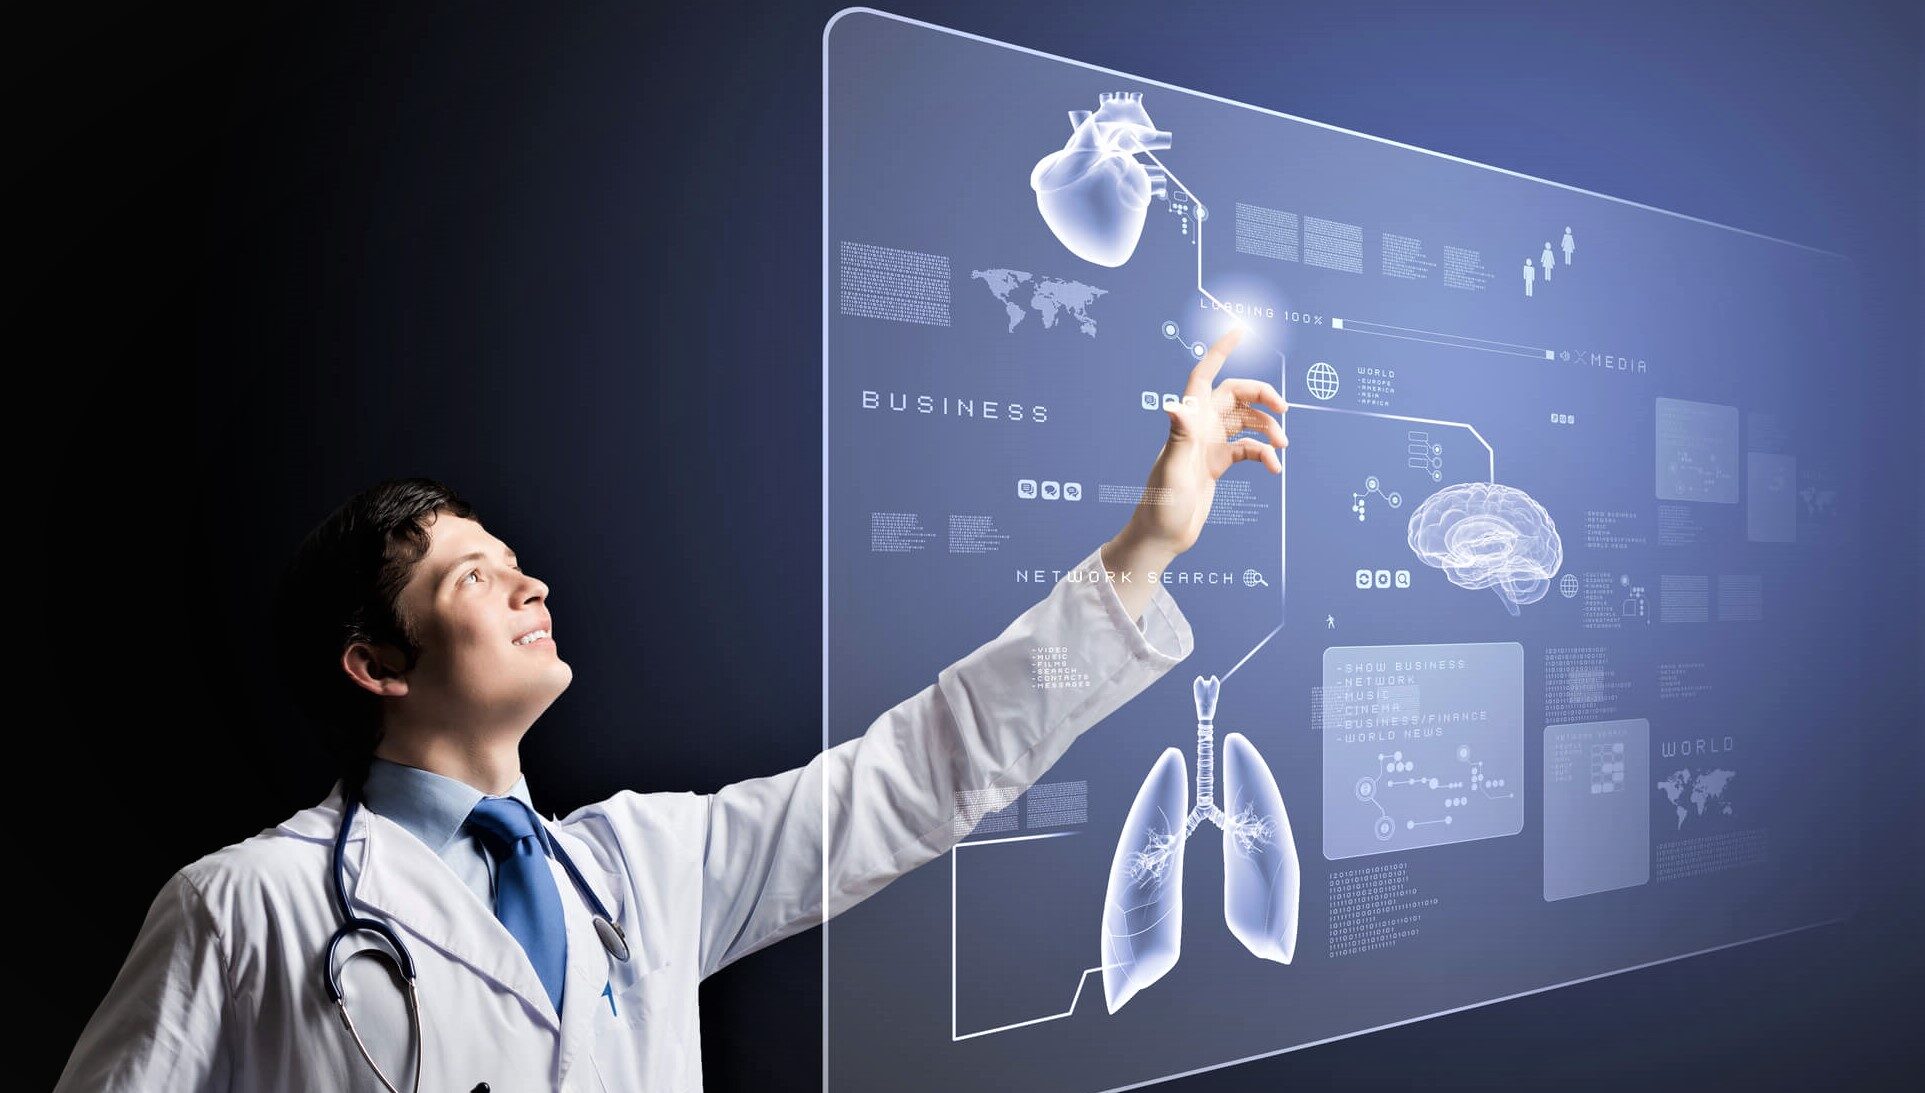 Medical Image Analysis Software Market Report 2026 – Adoption of Diagnostic Imaging